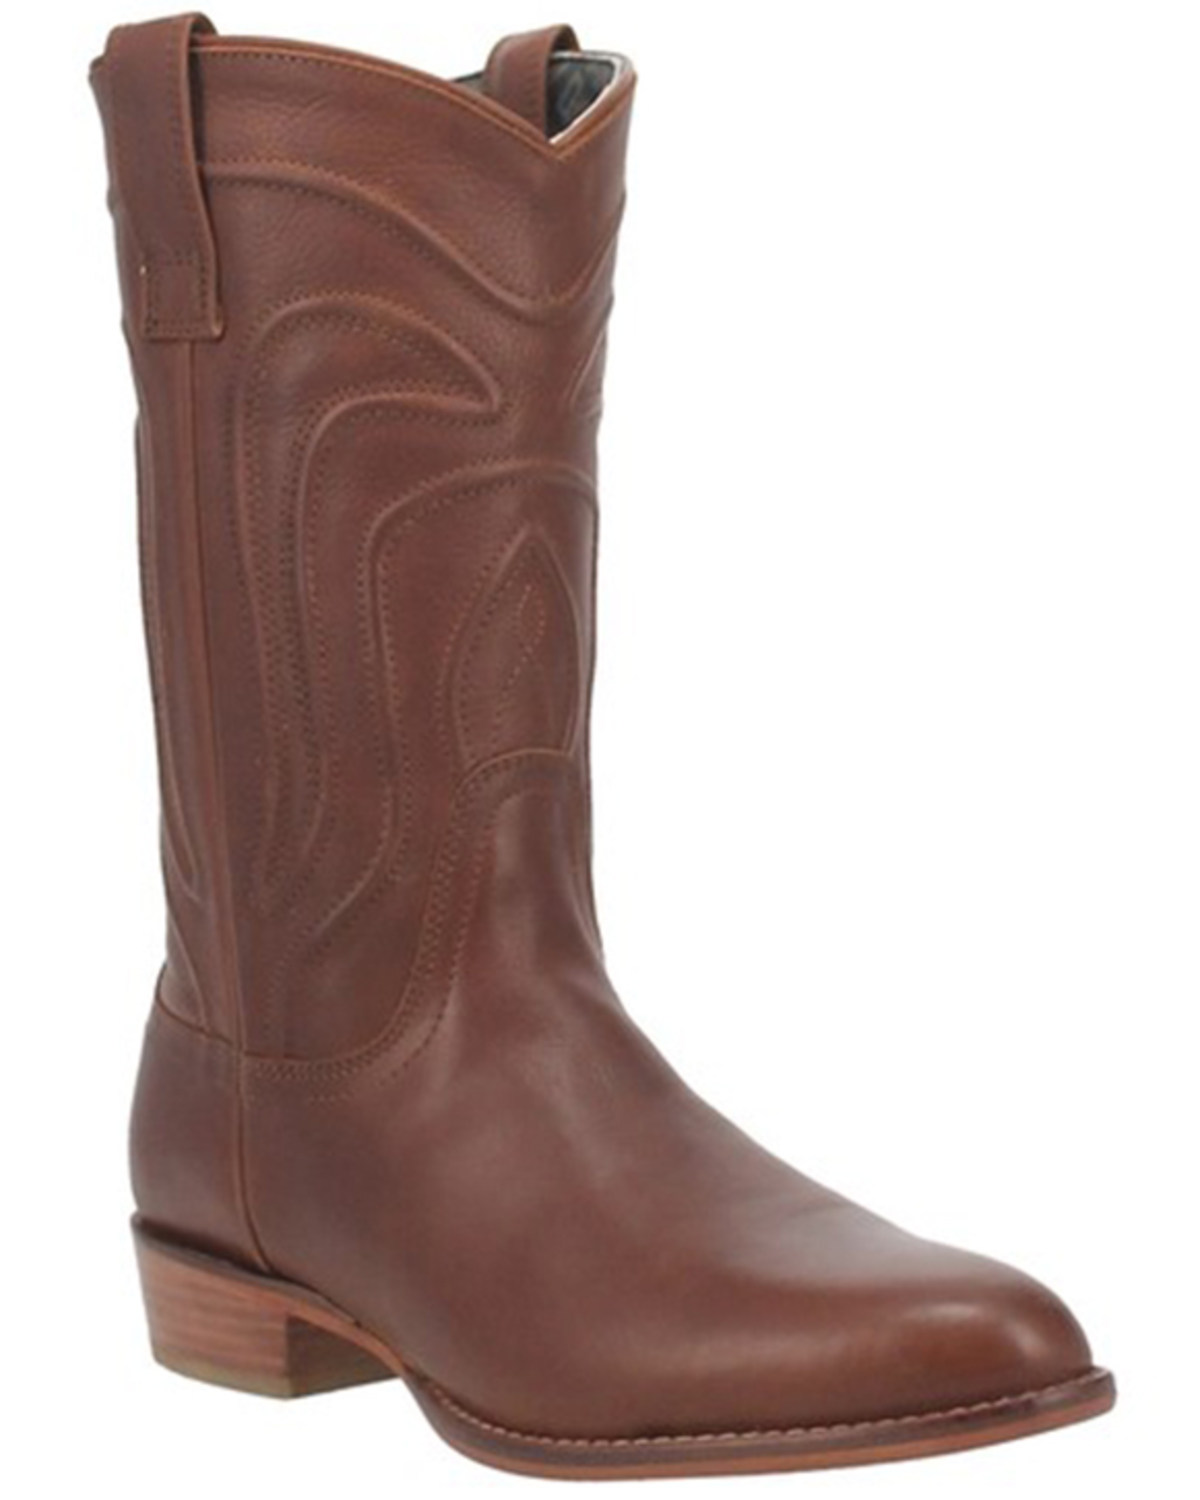 Dingo Men's Tan Montana Western Boots - Round Toe